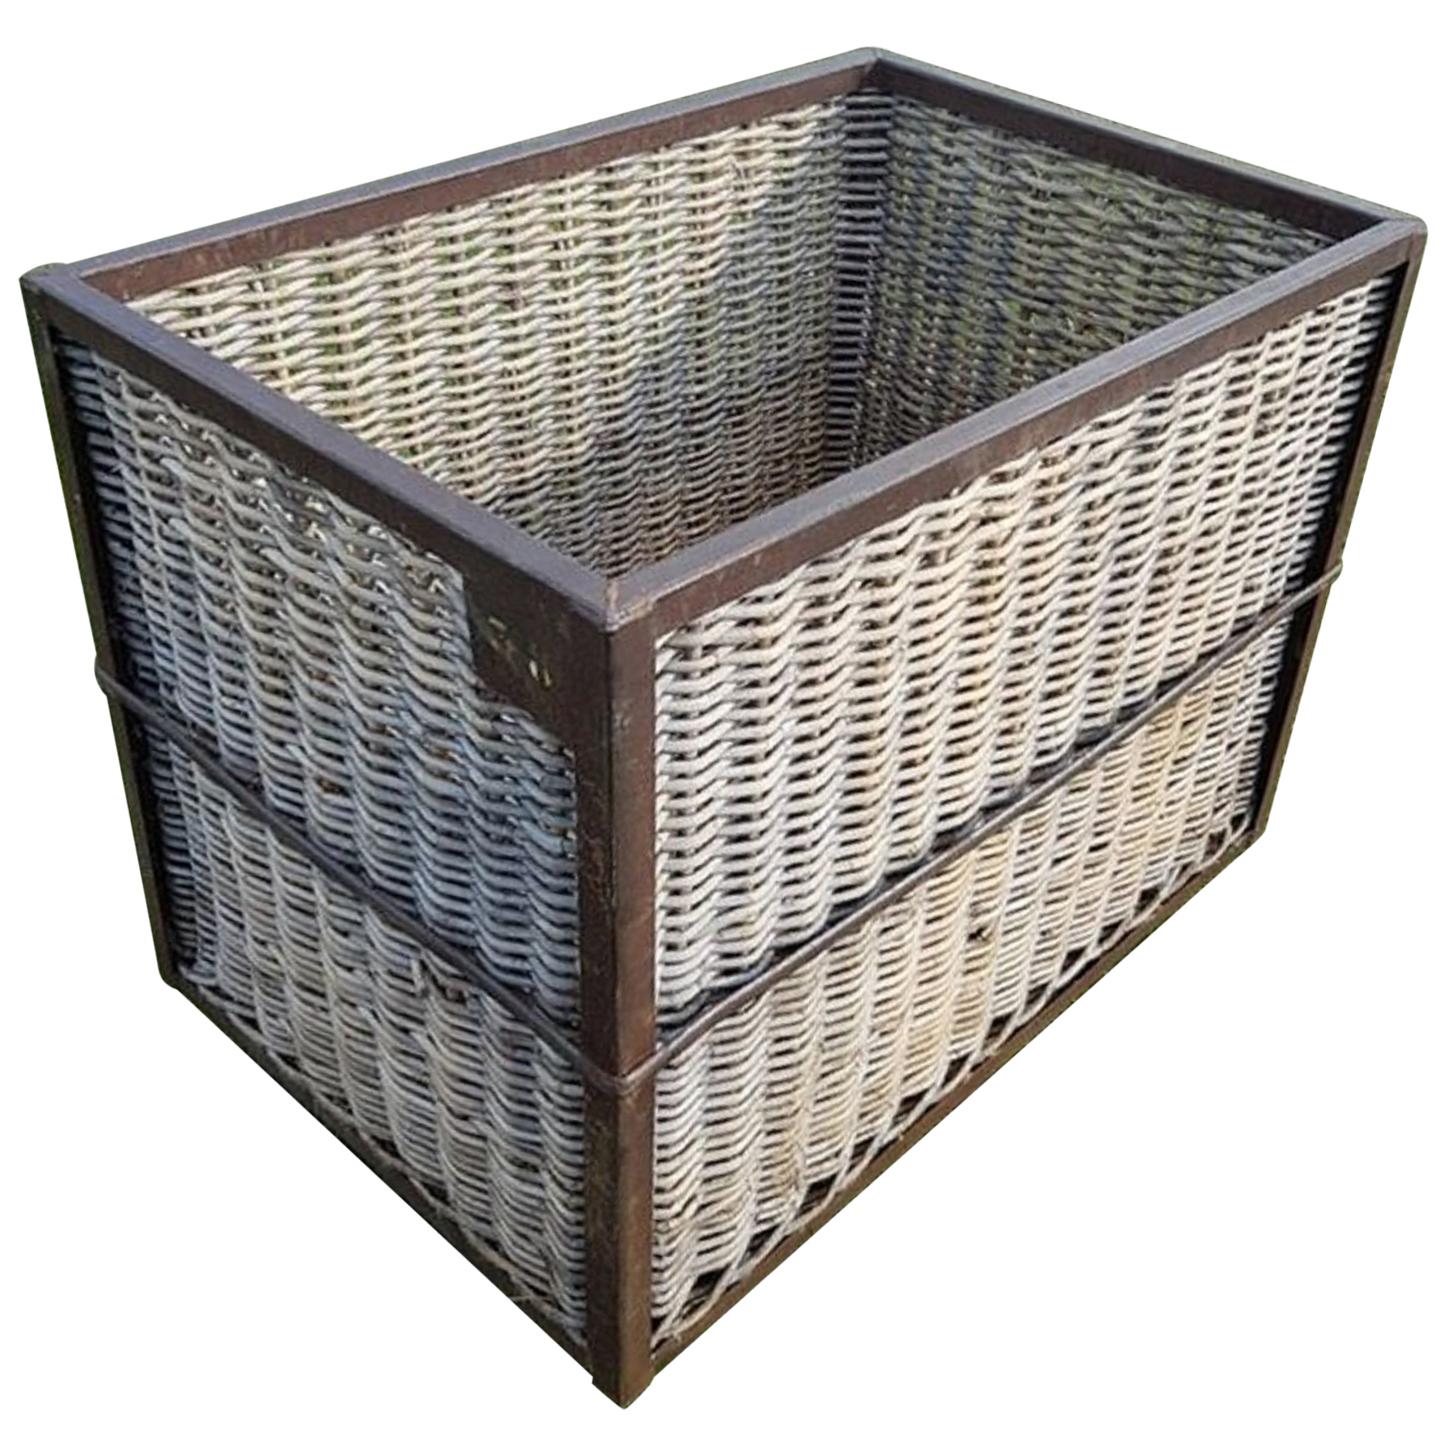 Choose Your Size MARBELLA Metal Stool Storage Bin Vintage Retro Laundry Basket 